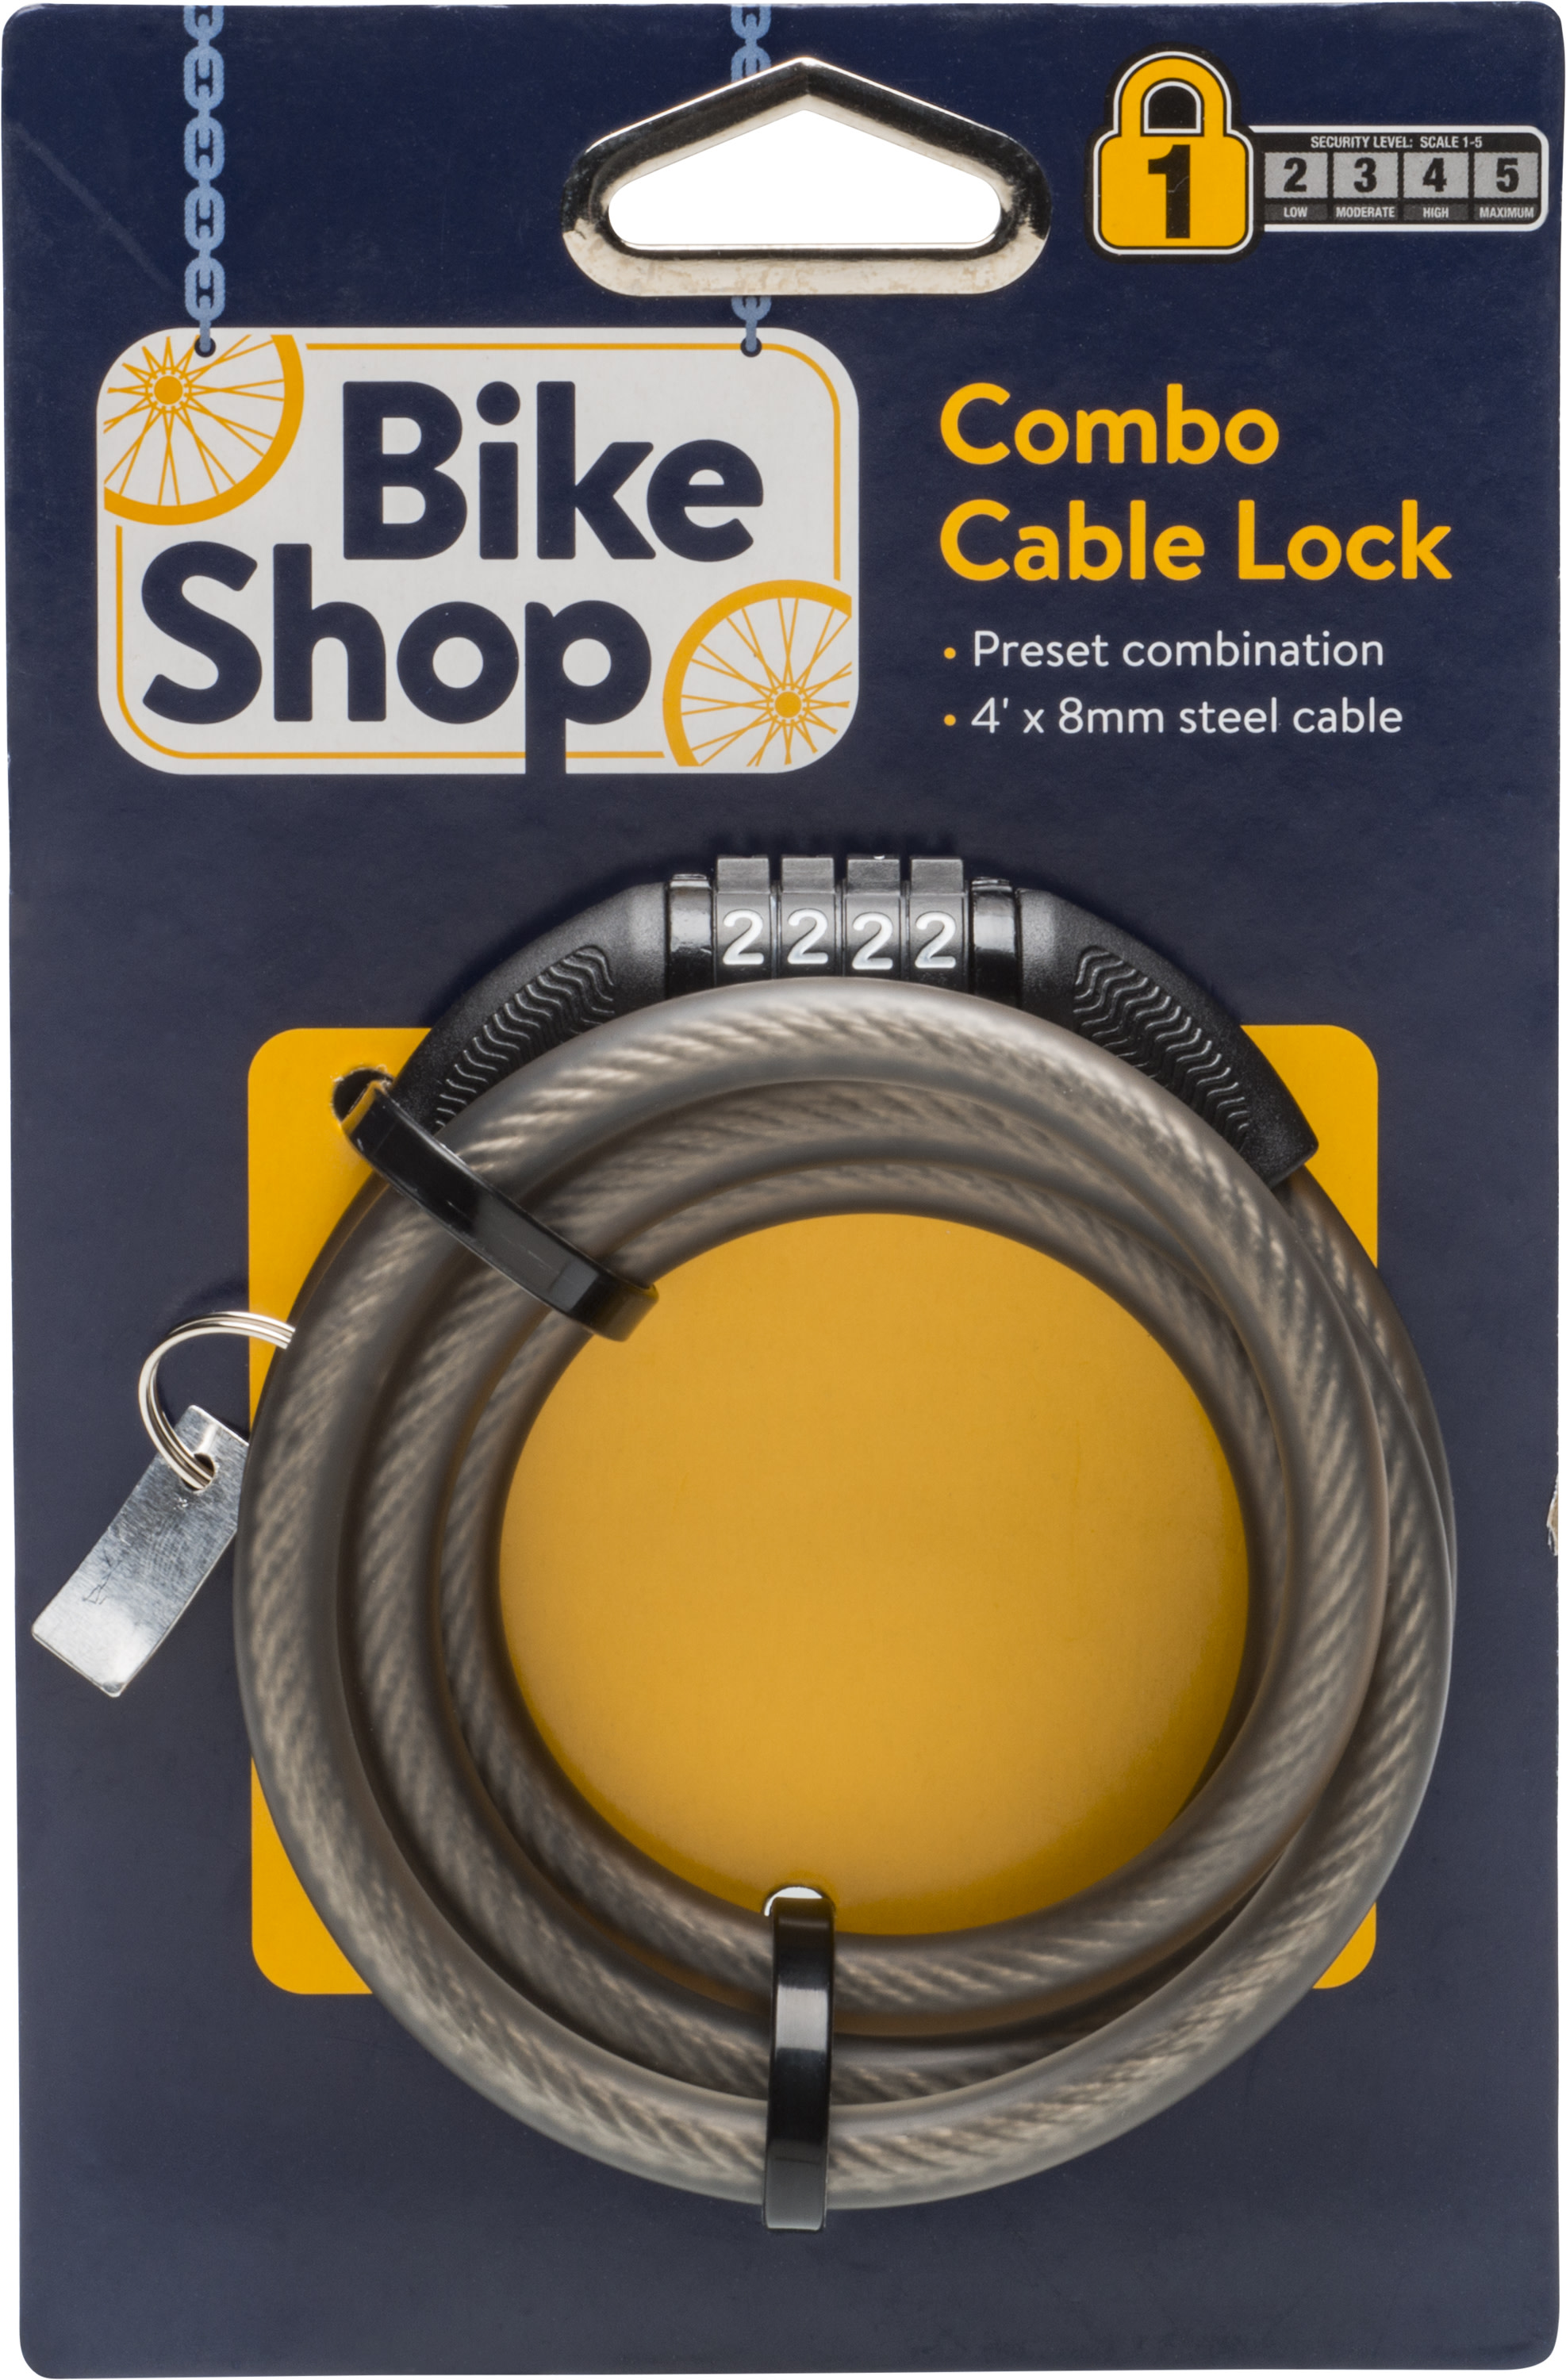 Bike Shop 4ft x 8mm Combo Cable Bike Lock - image 4 of 5